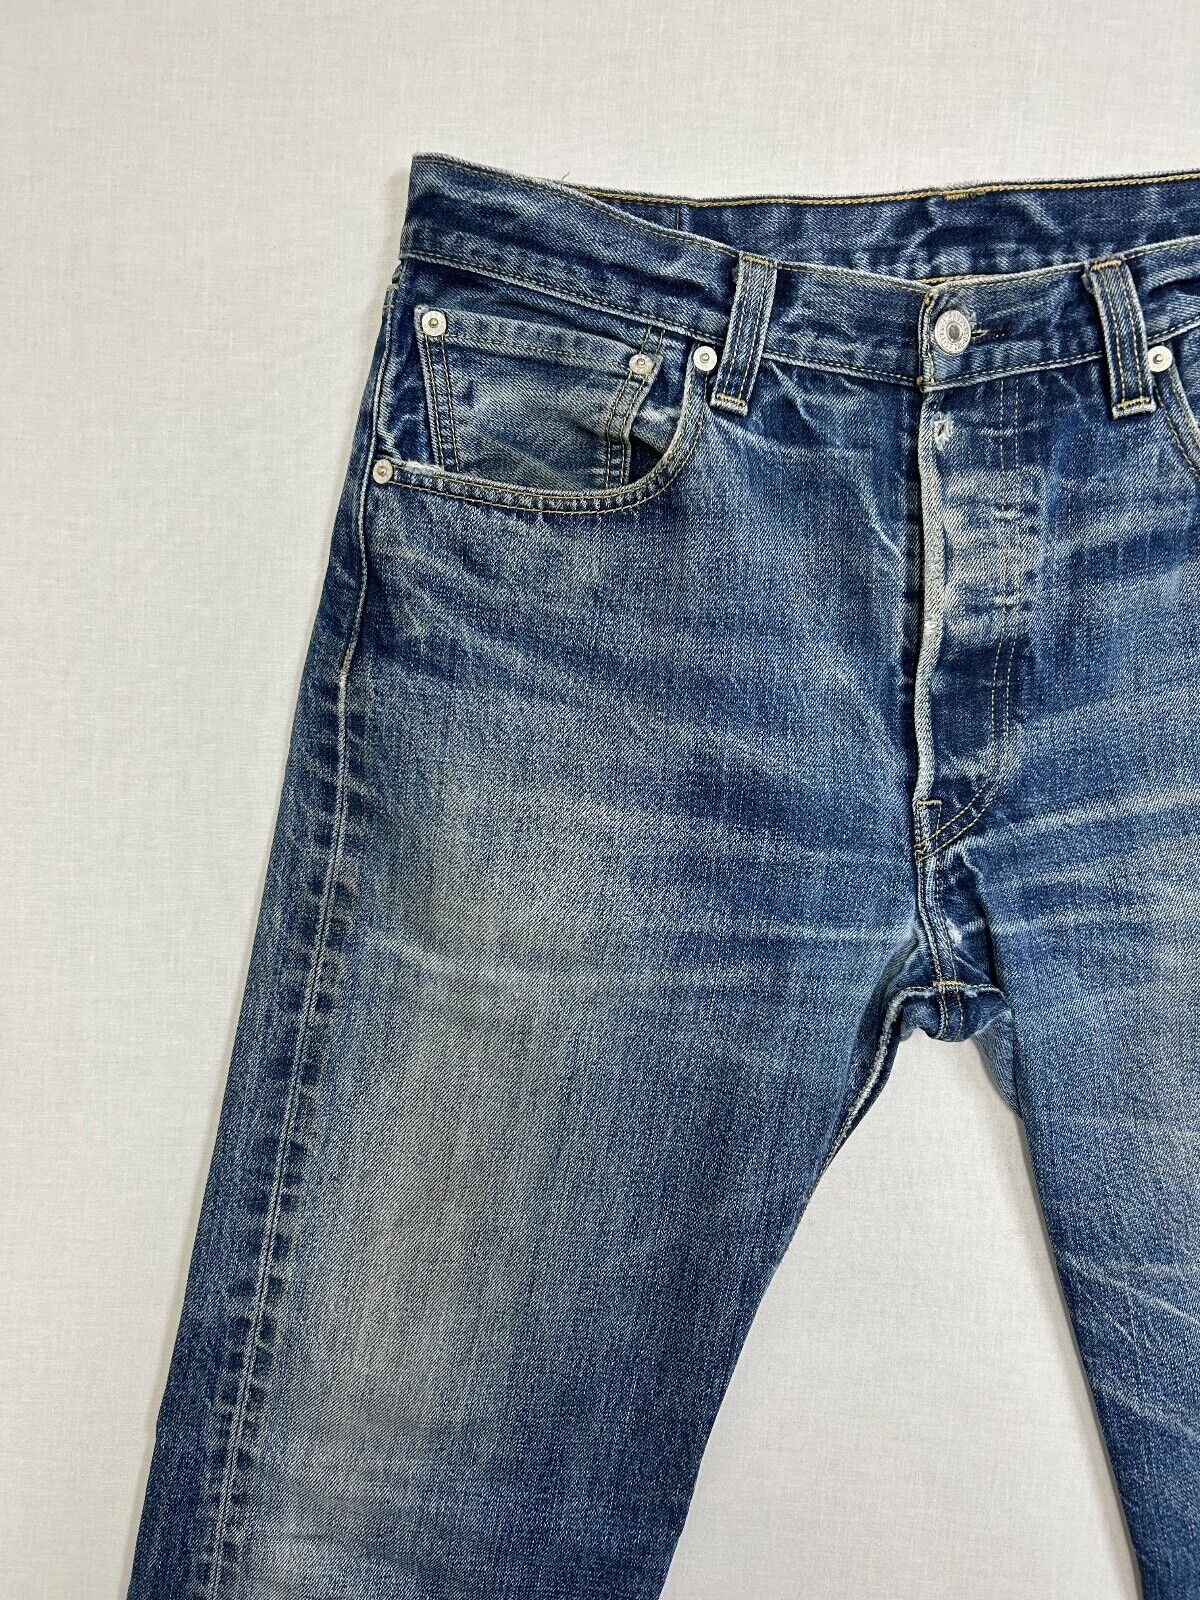 Levis 501 jeans size 34 men straight button fly blue 34x29.5 distressed denim